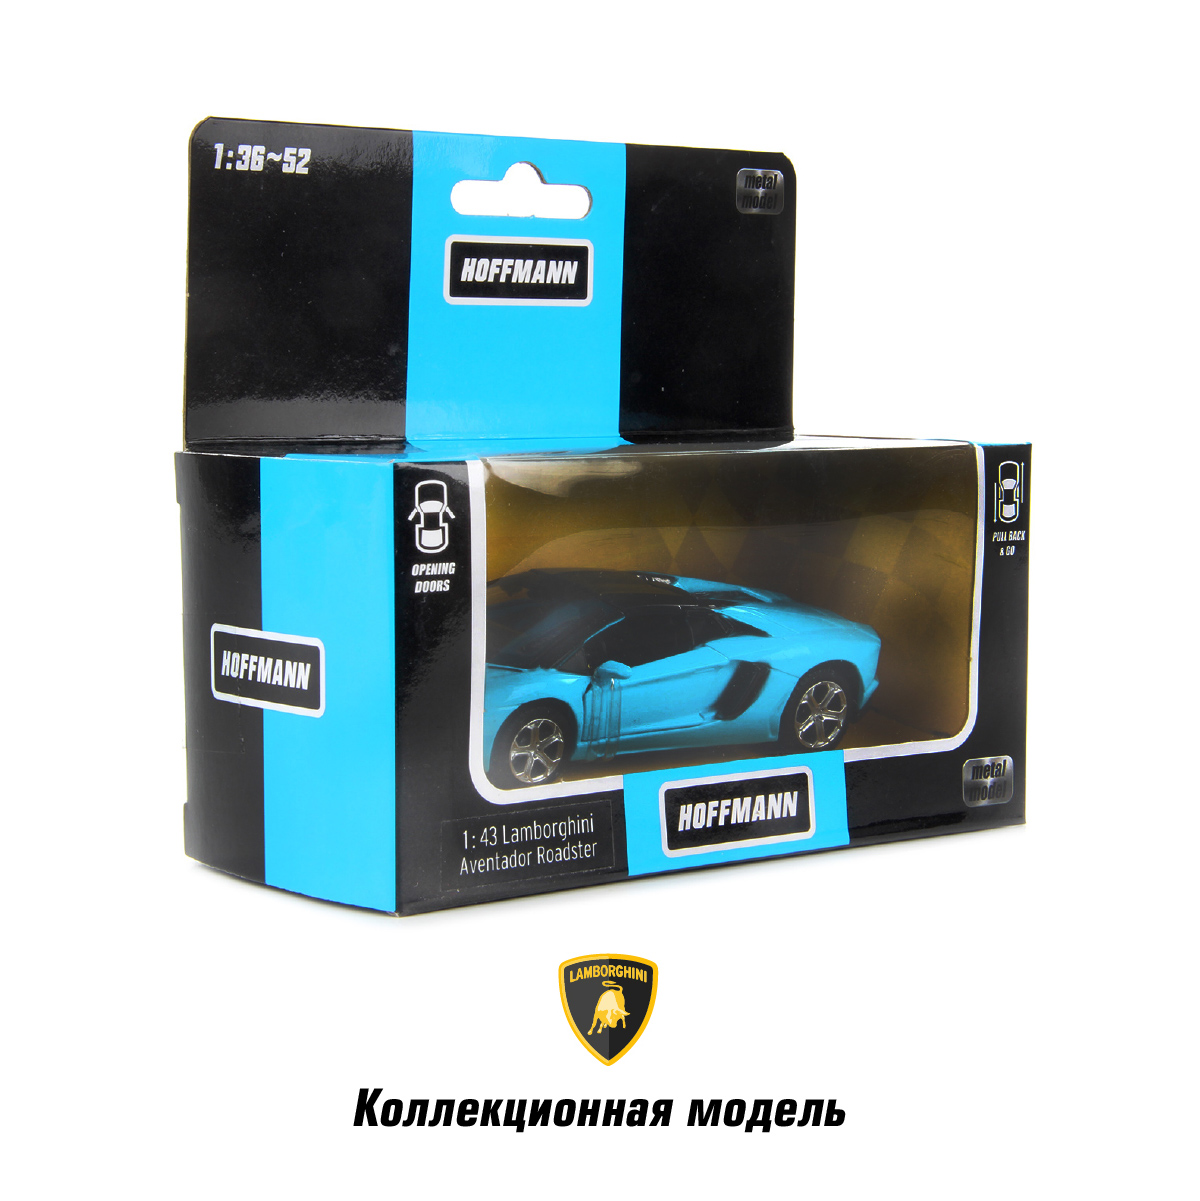 Машинки HOFFMANN Ламборджини 1:43 Lamborghini Aventador LP700-4 Roadster металлическая 58025 - фото 5